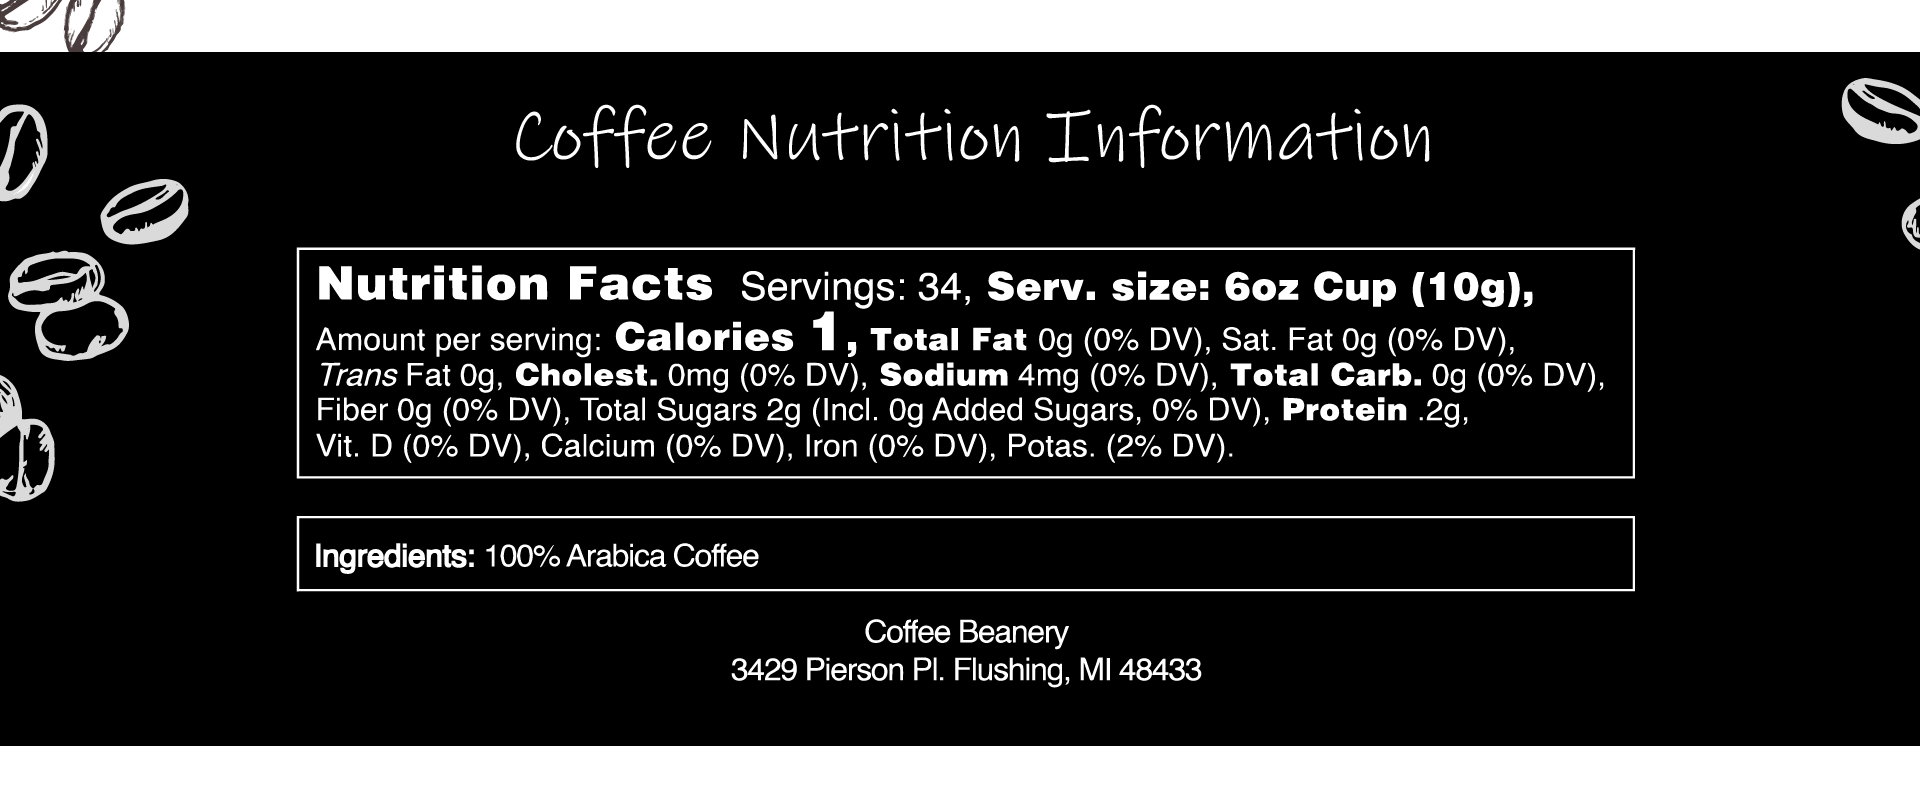 Coffee Nutrition Information